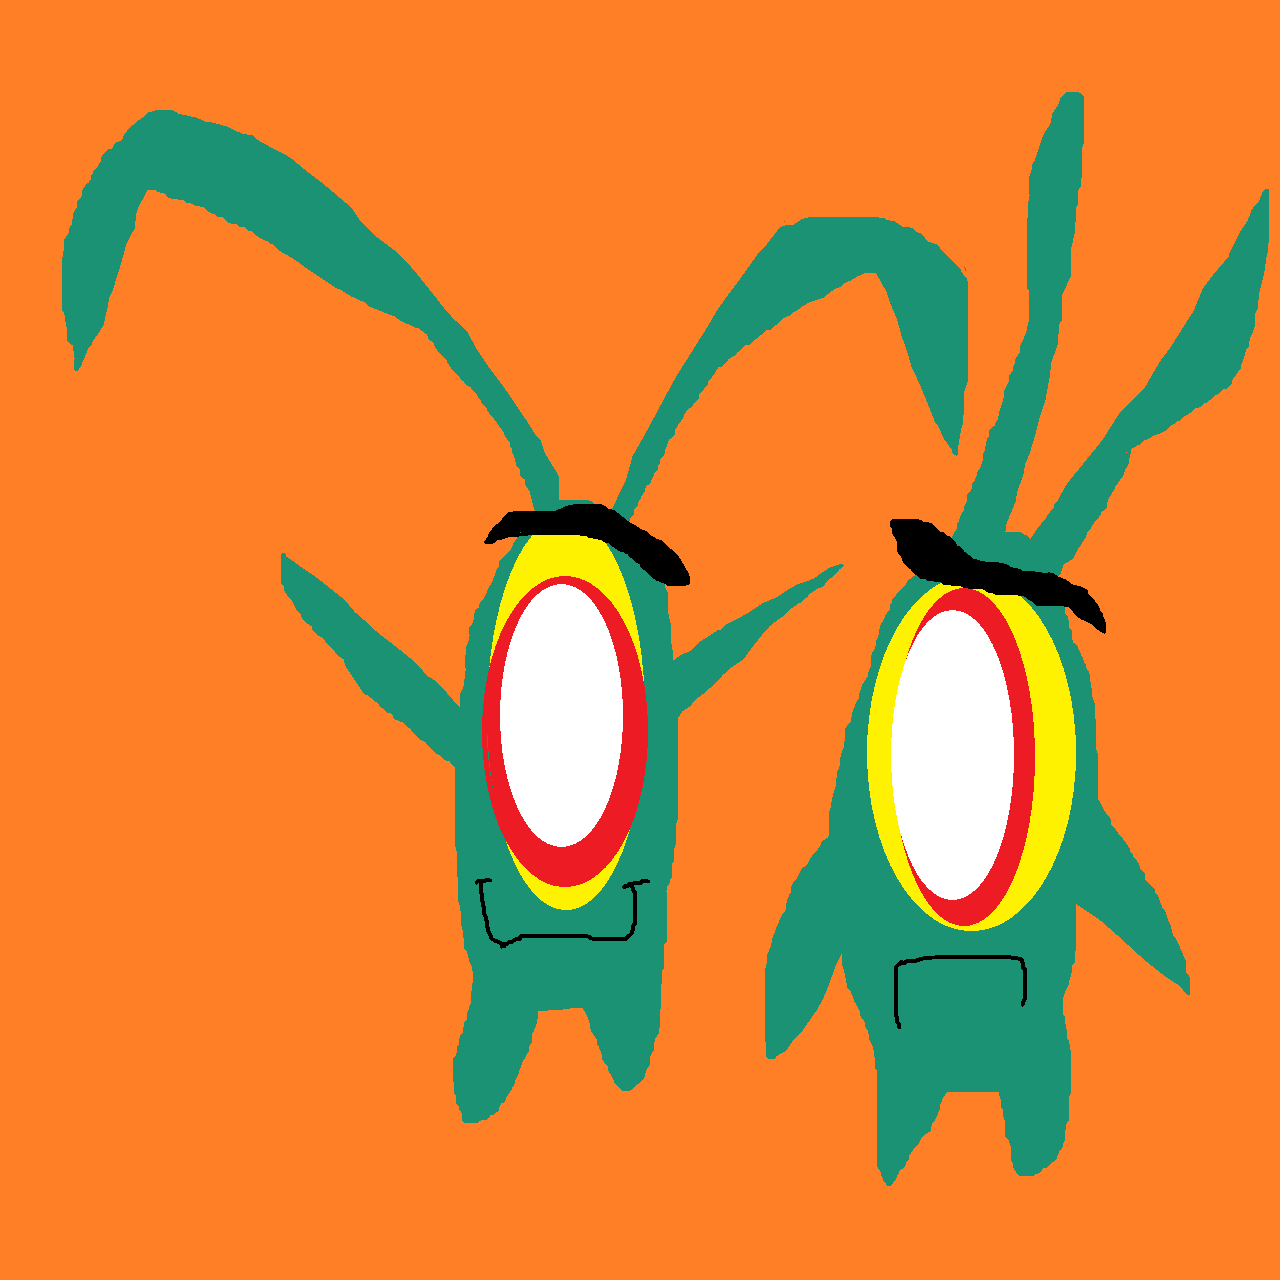 Two Random Planktons by Falconlobo